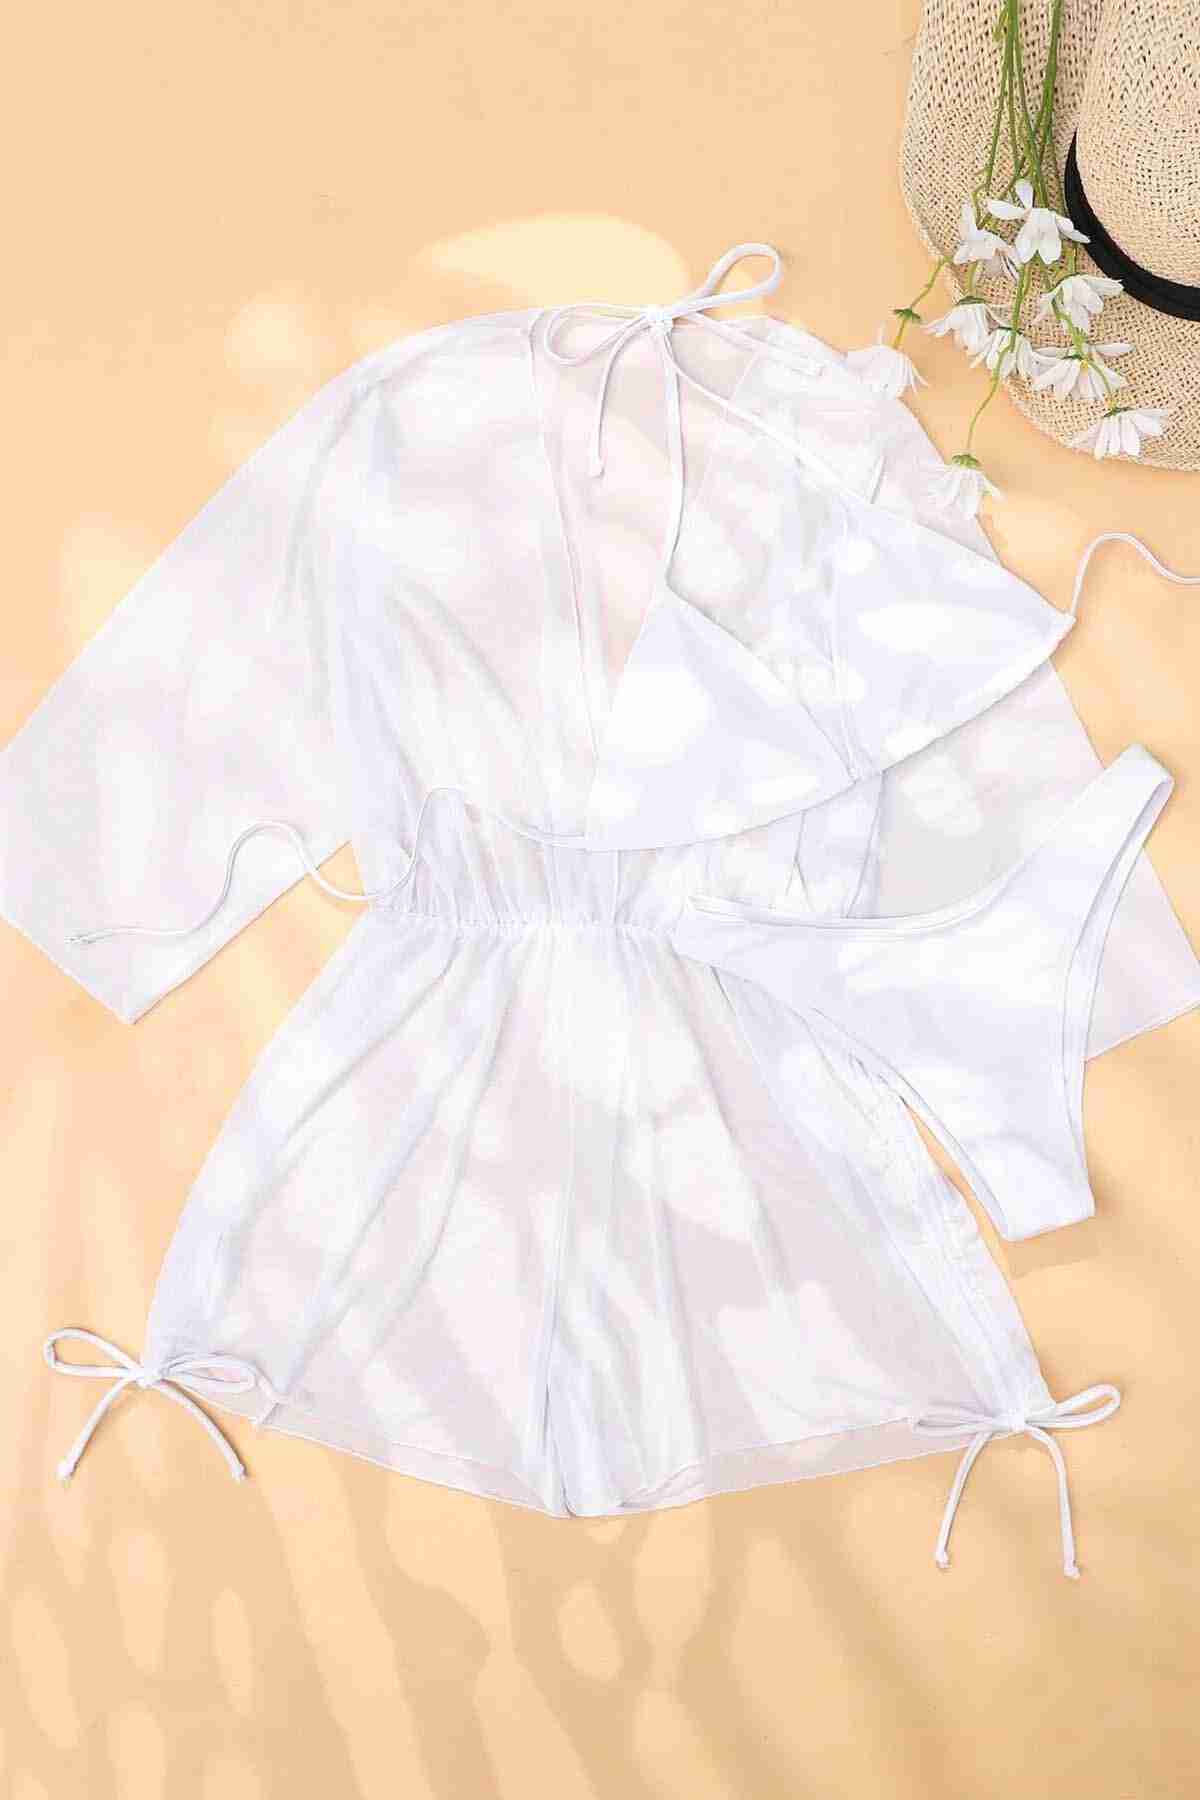 Tulle Pareo Beach Dress Cover Up Kimono